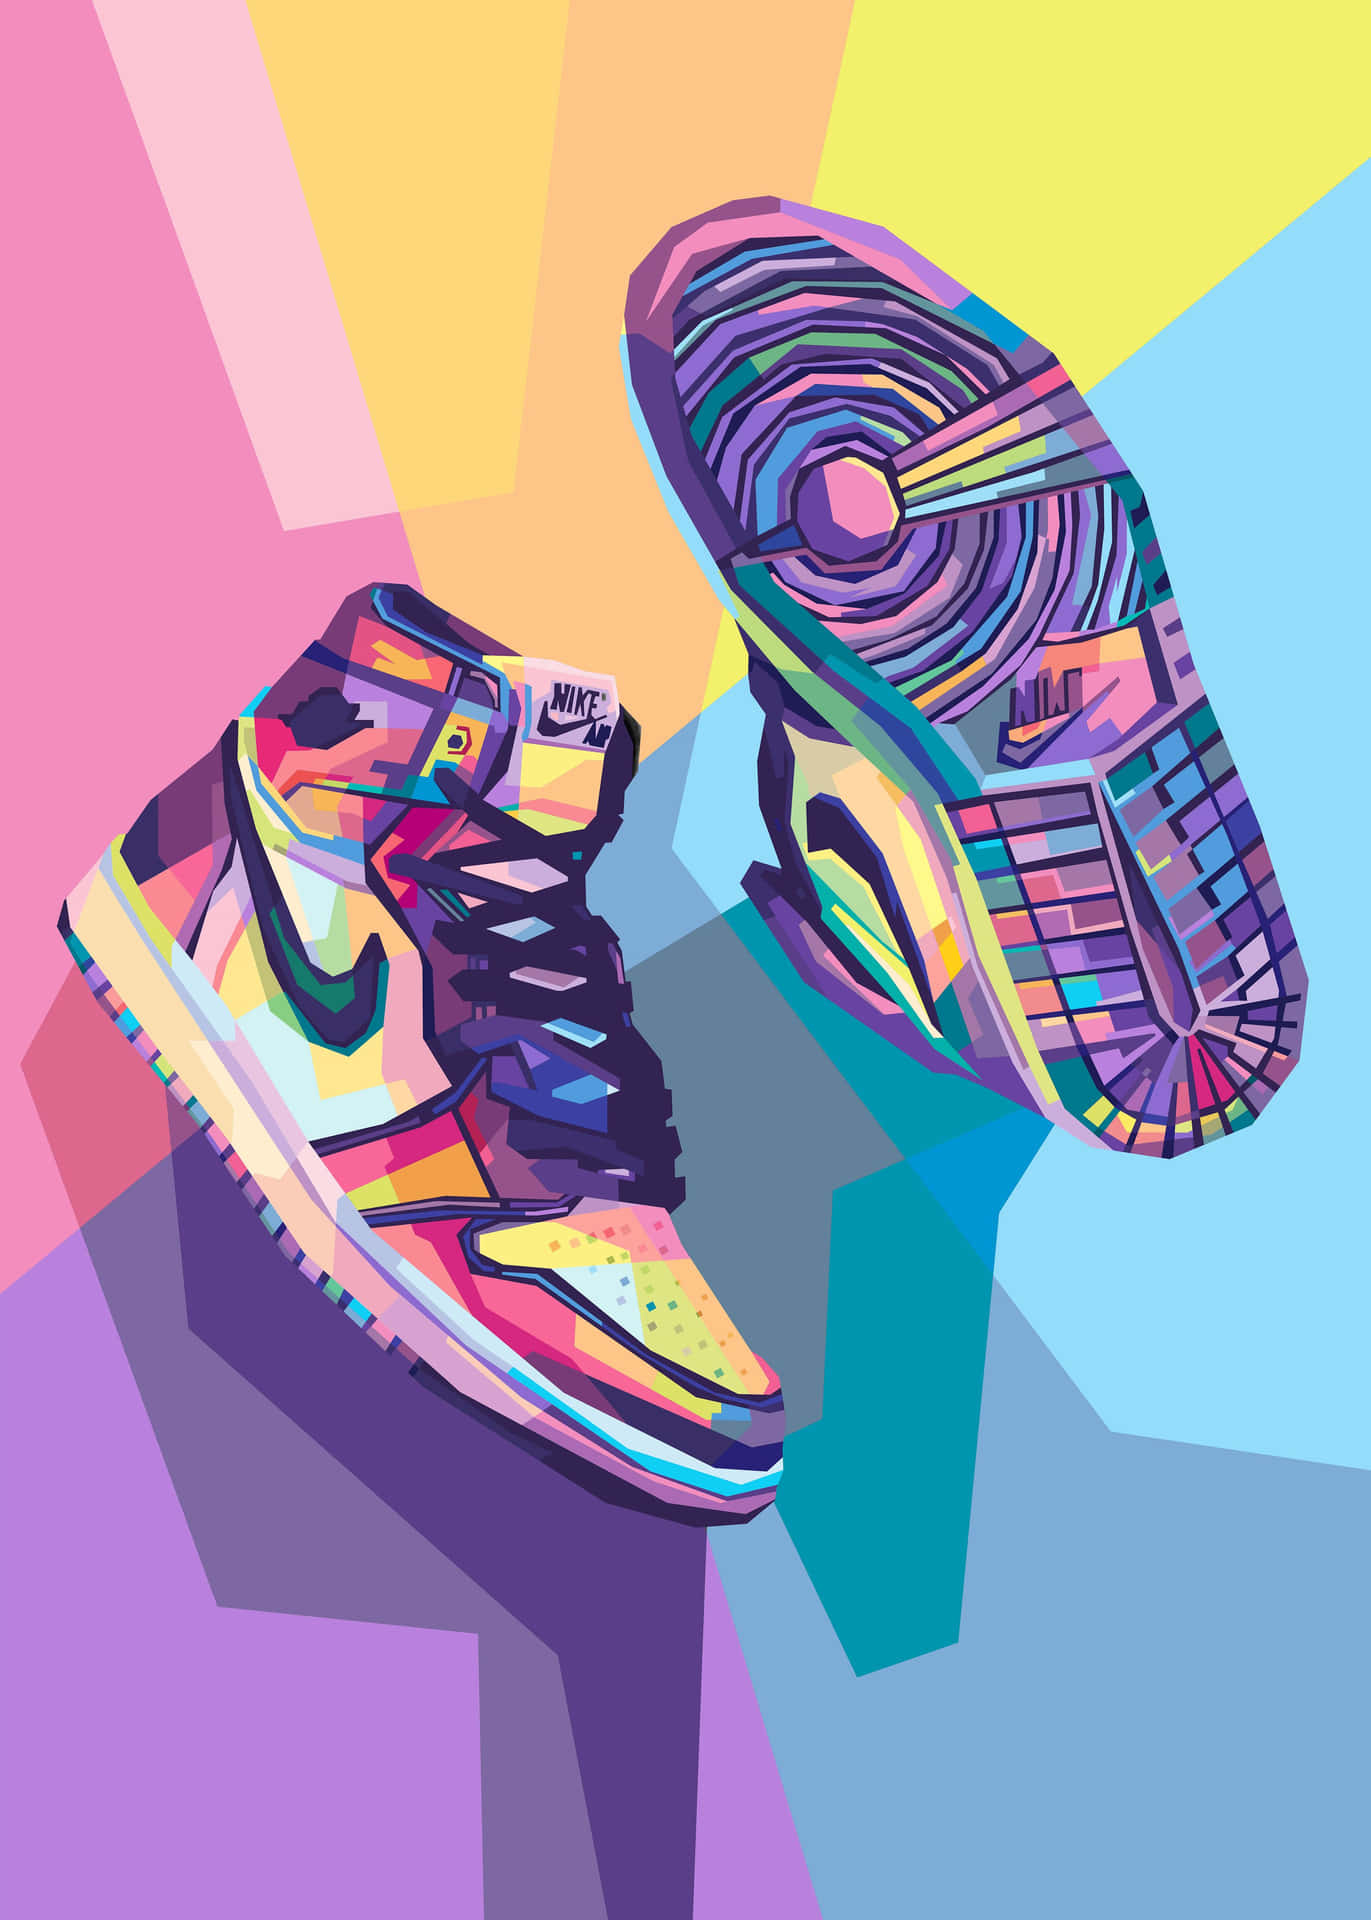 Nike Sneakers Wallpapers  Top Free Nike Sneakers Backgrounds   WallpaperAccess